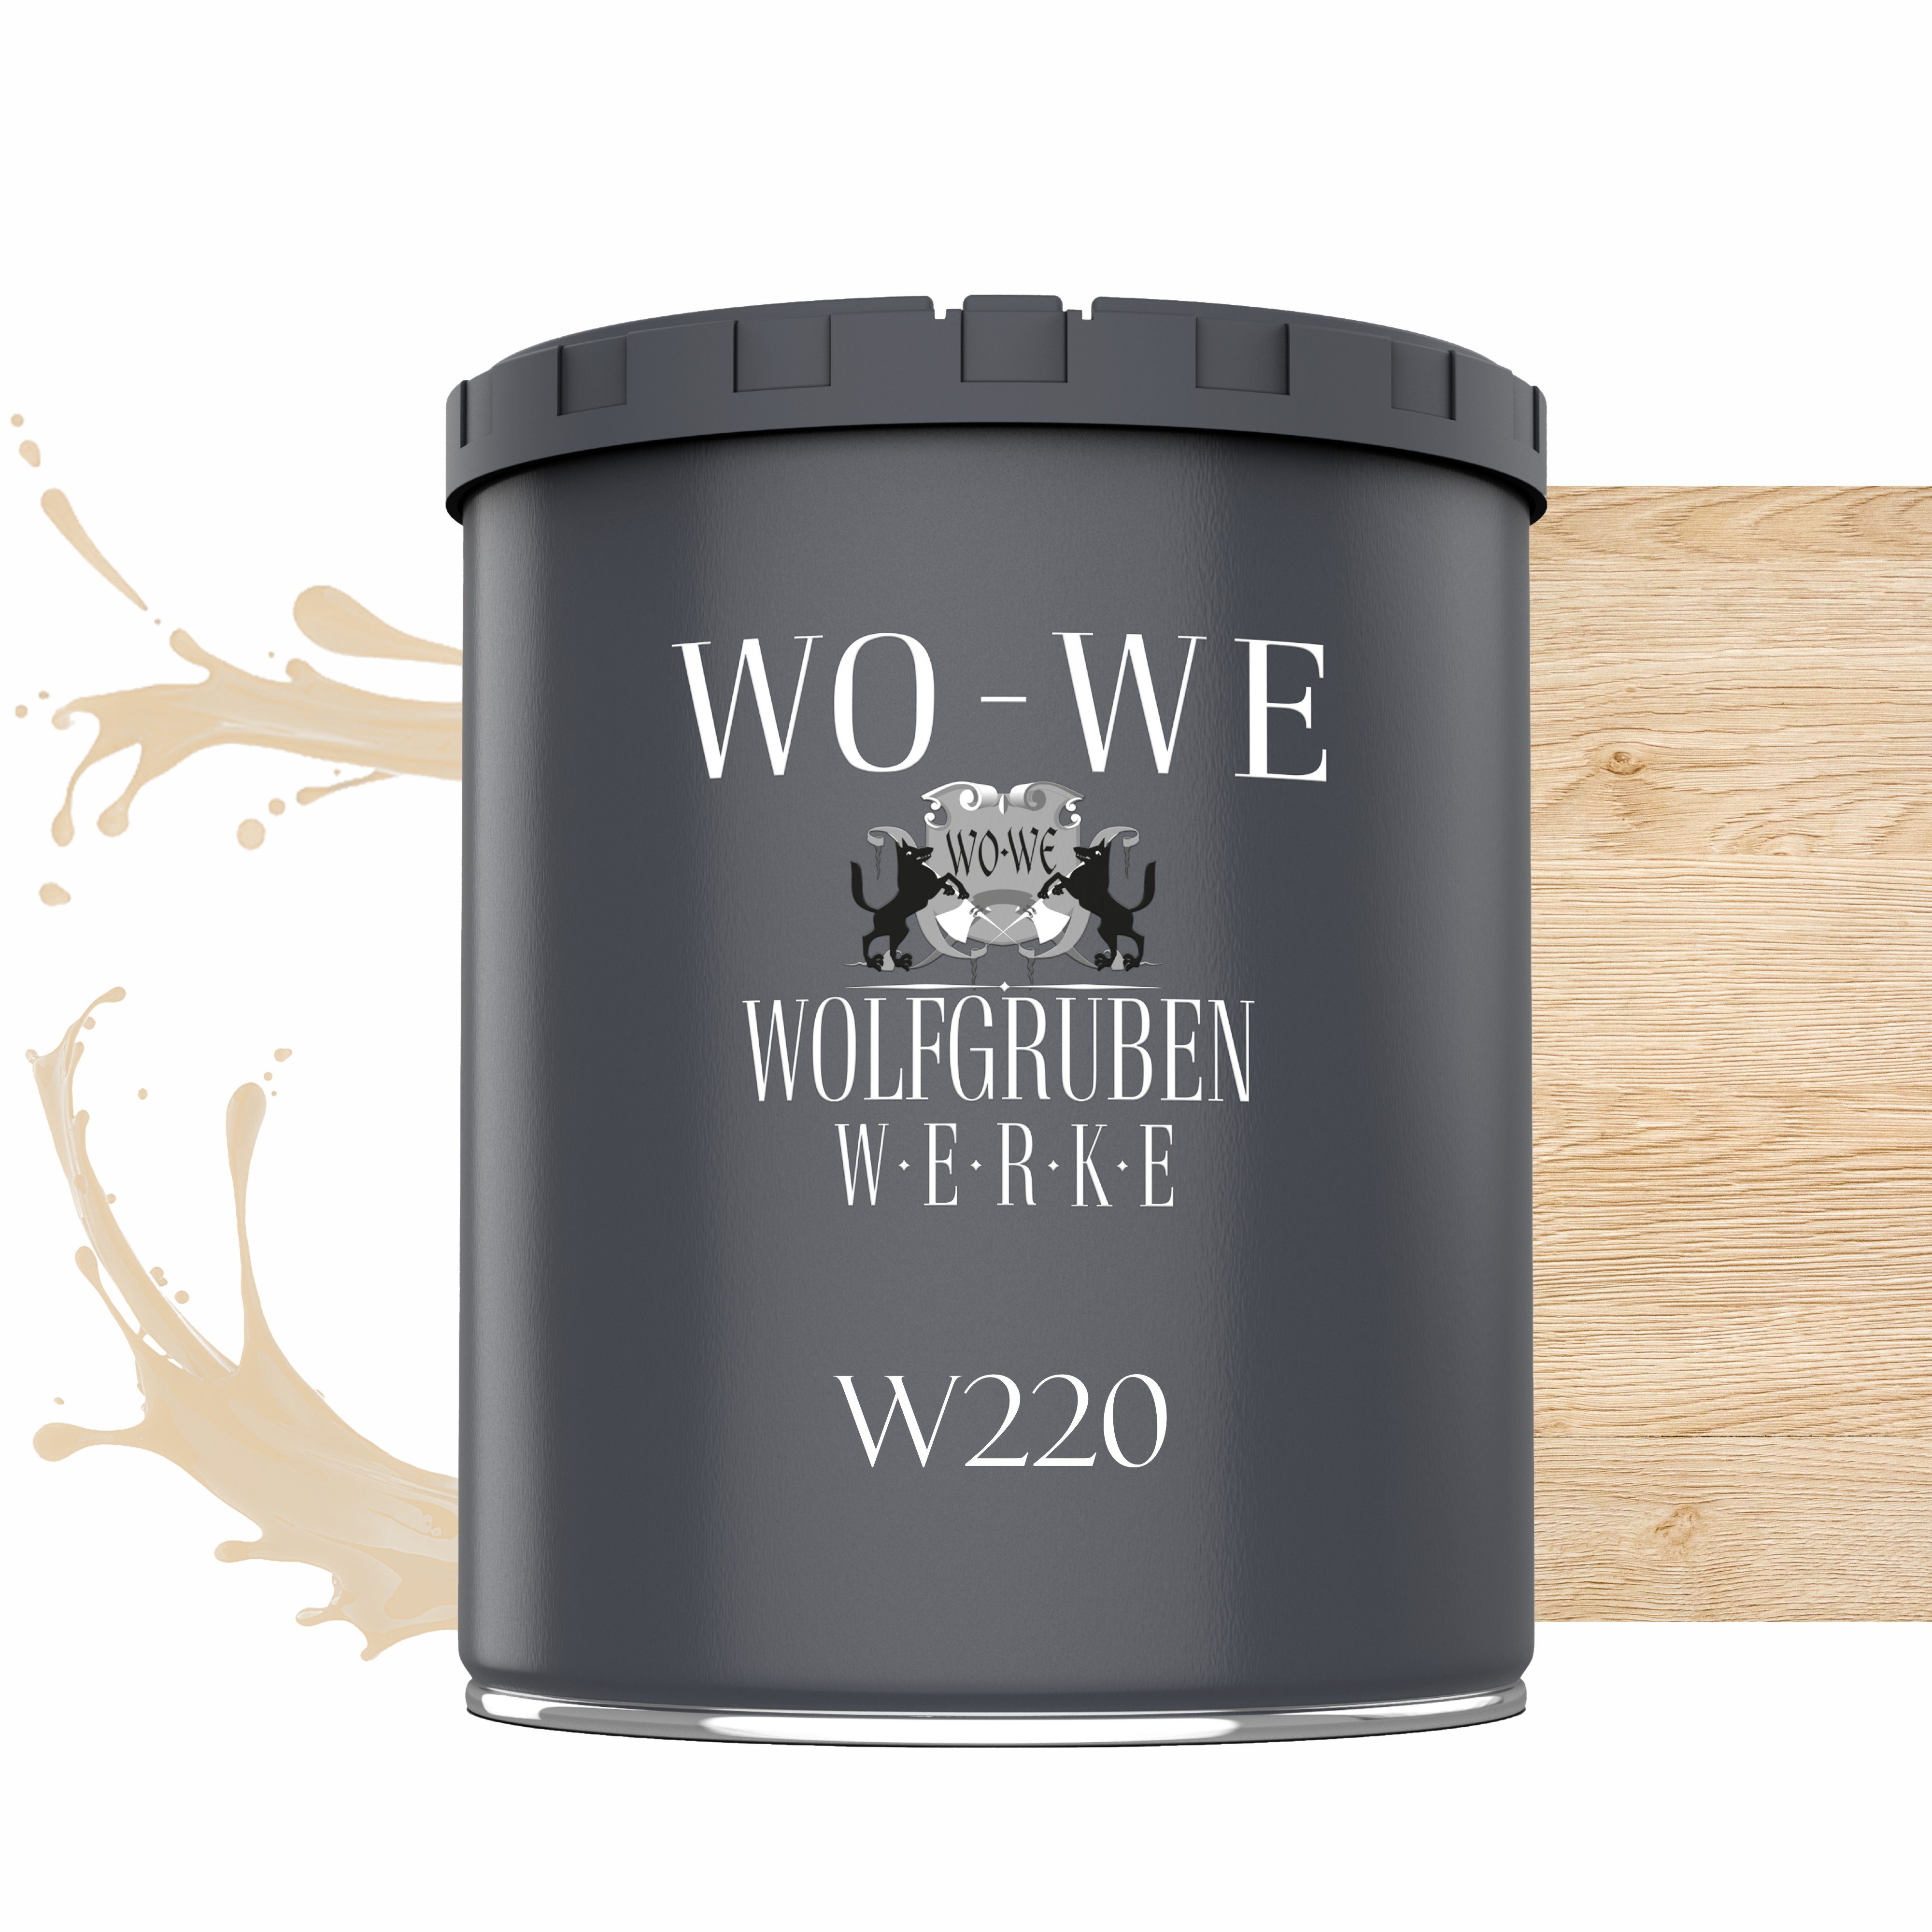 Dickschichtlasur Holzschutzlasur Farblos WO-WE W220, Lösemittelfrei, 1-2,5L, 2in1 Holzlasur UV-stabil